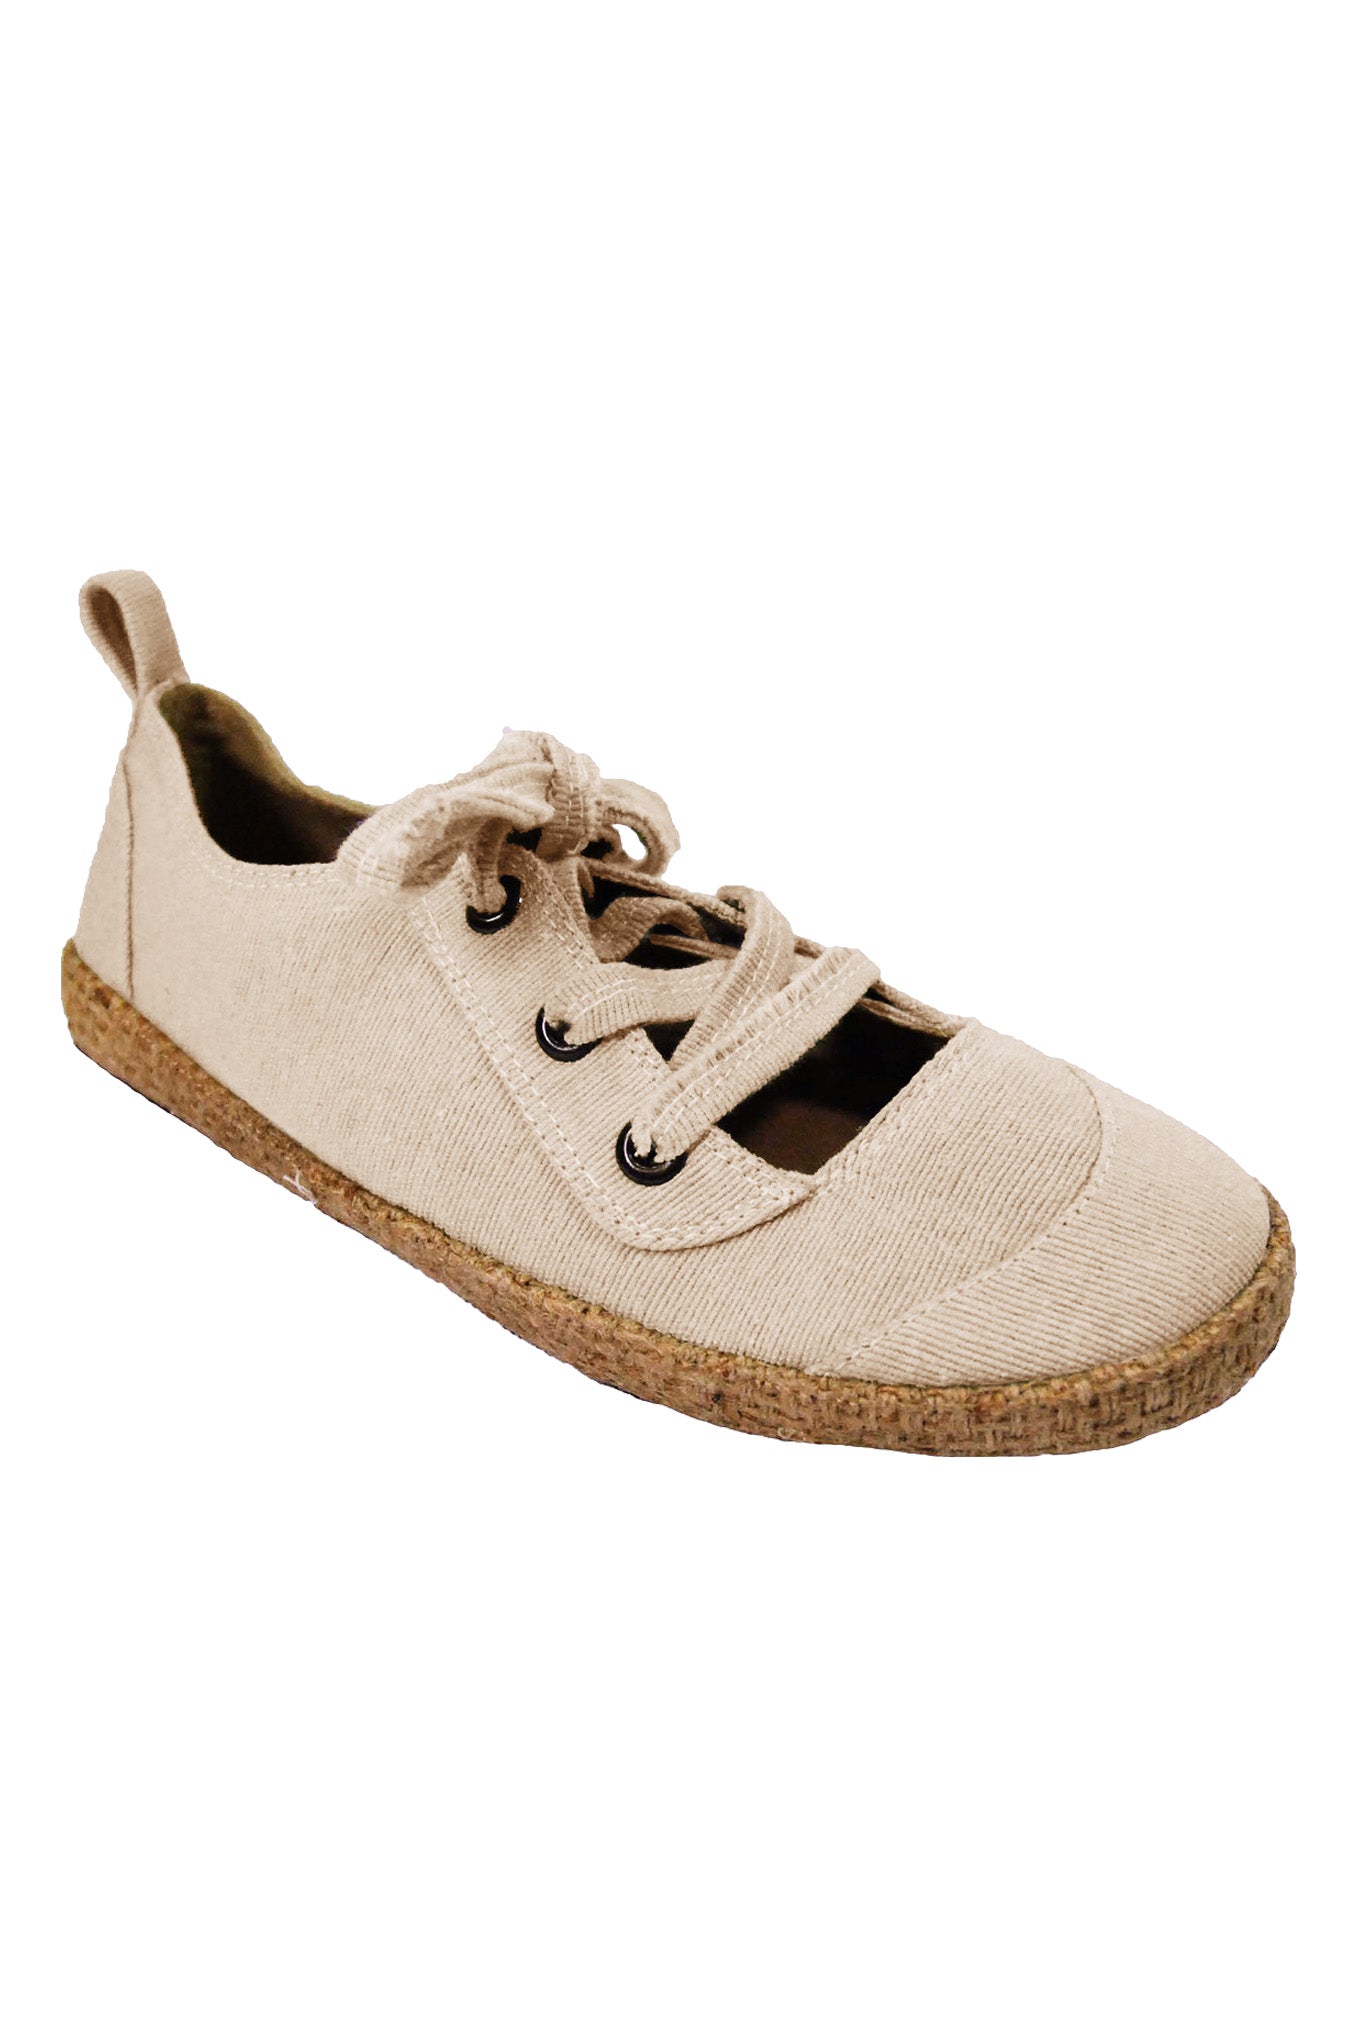 BALI BALLET Shoes - Stone, EURO 36